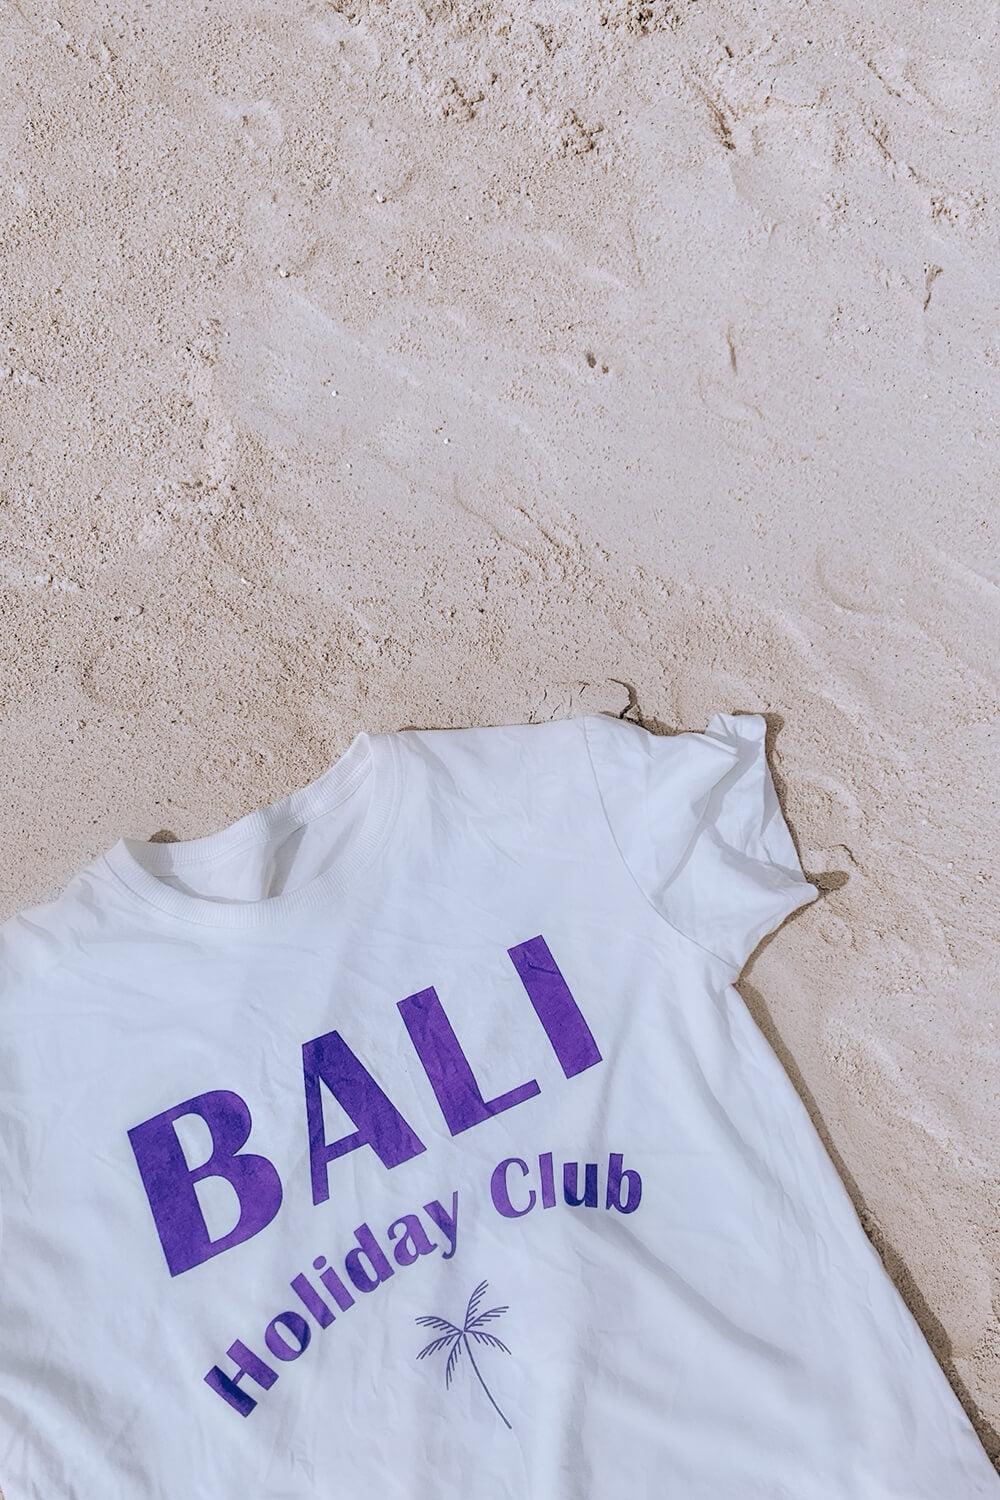 Bali Holiday Club T-shirt